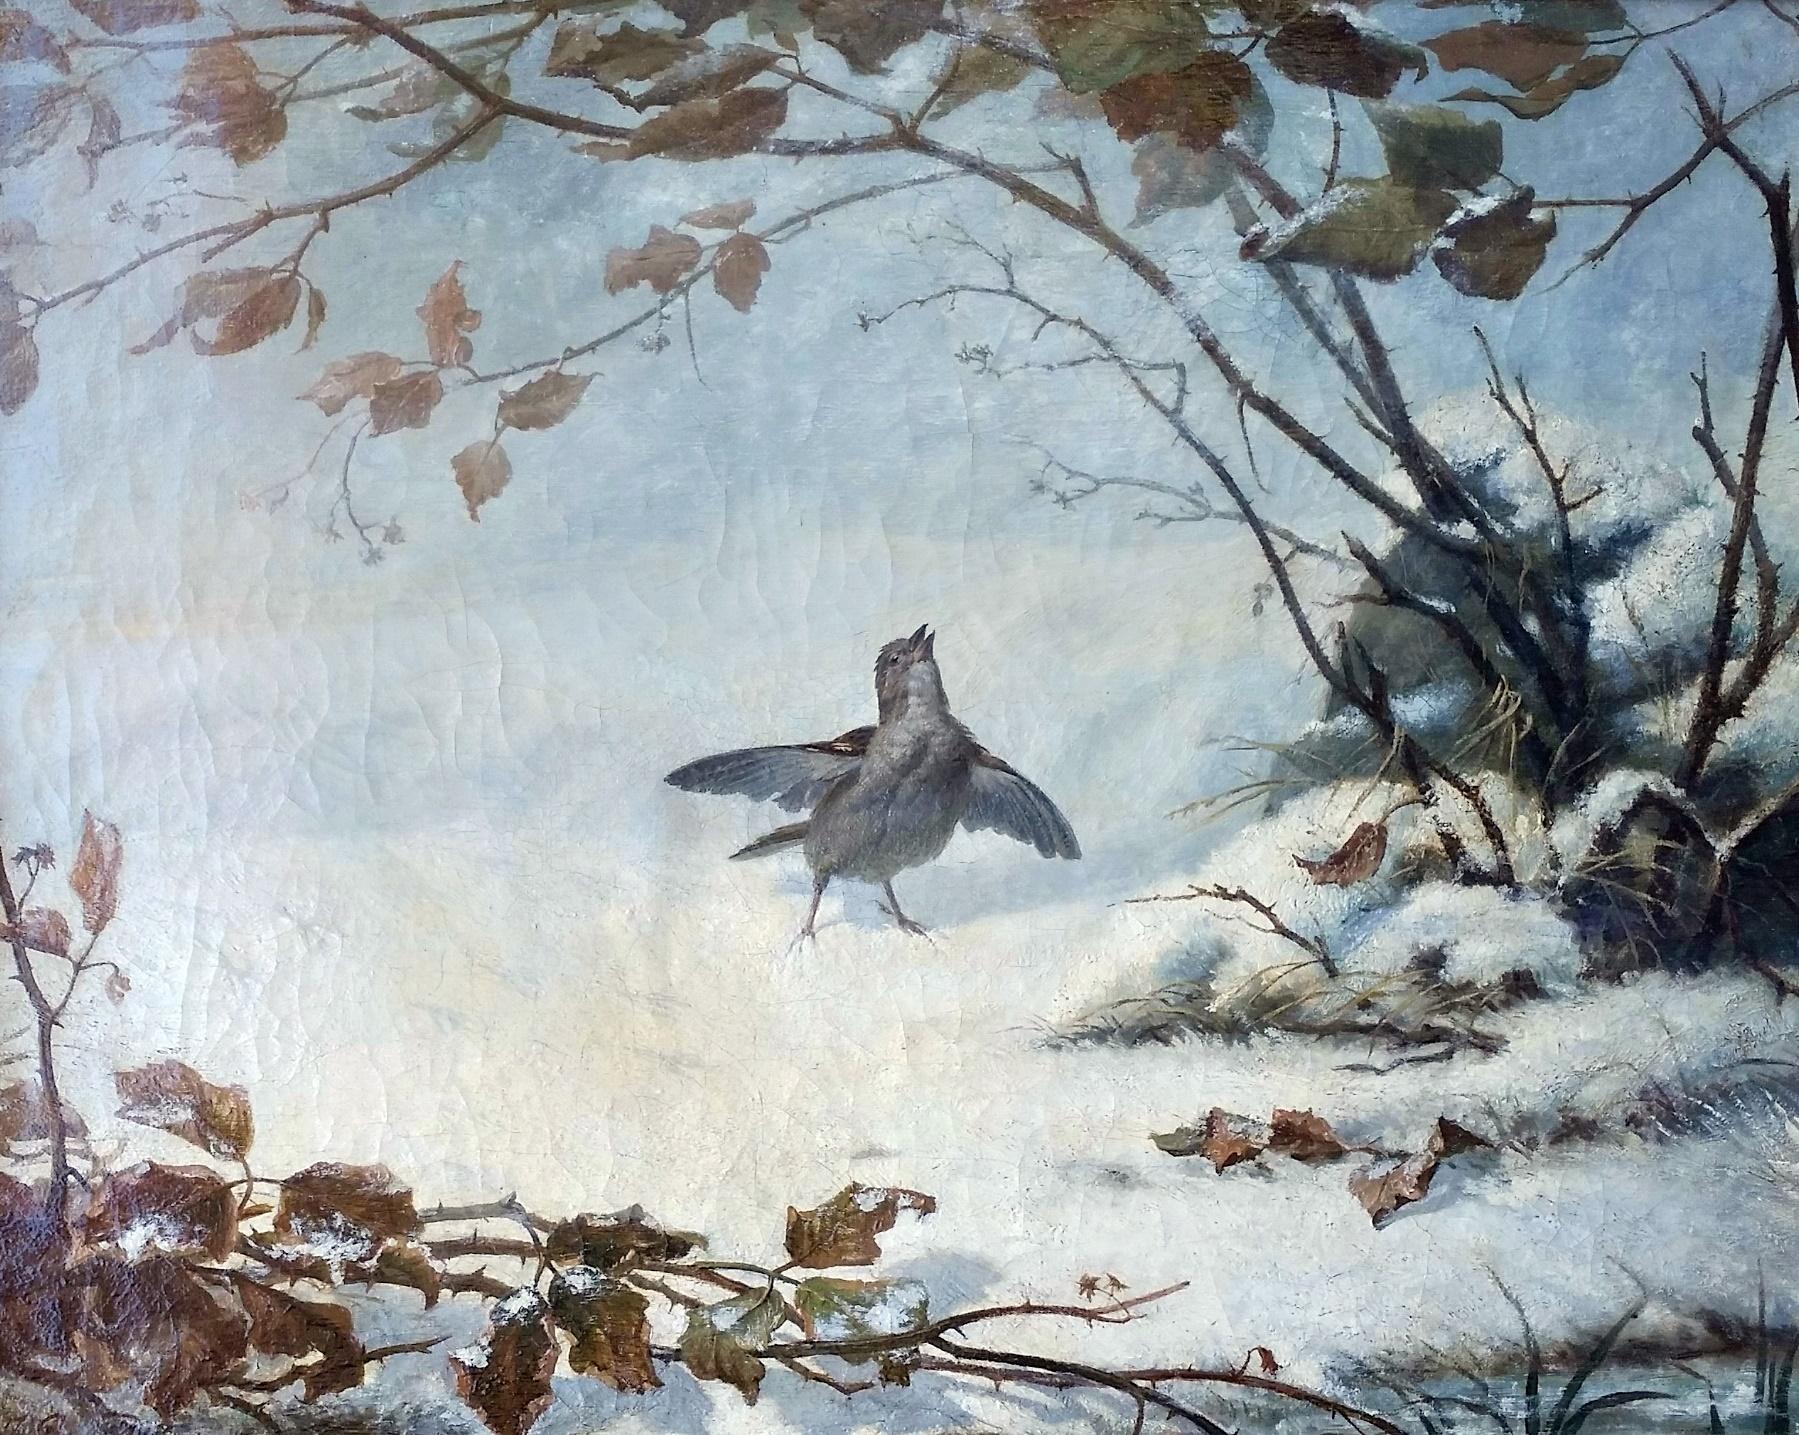 Songbird in Snowy Landscape, Winter Bird, Danish?, J Brady, signed and dated